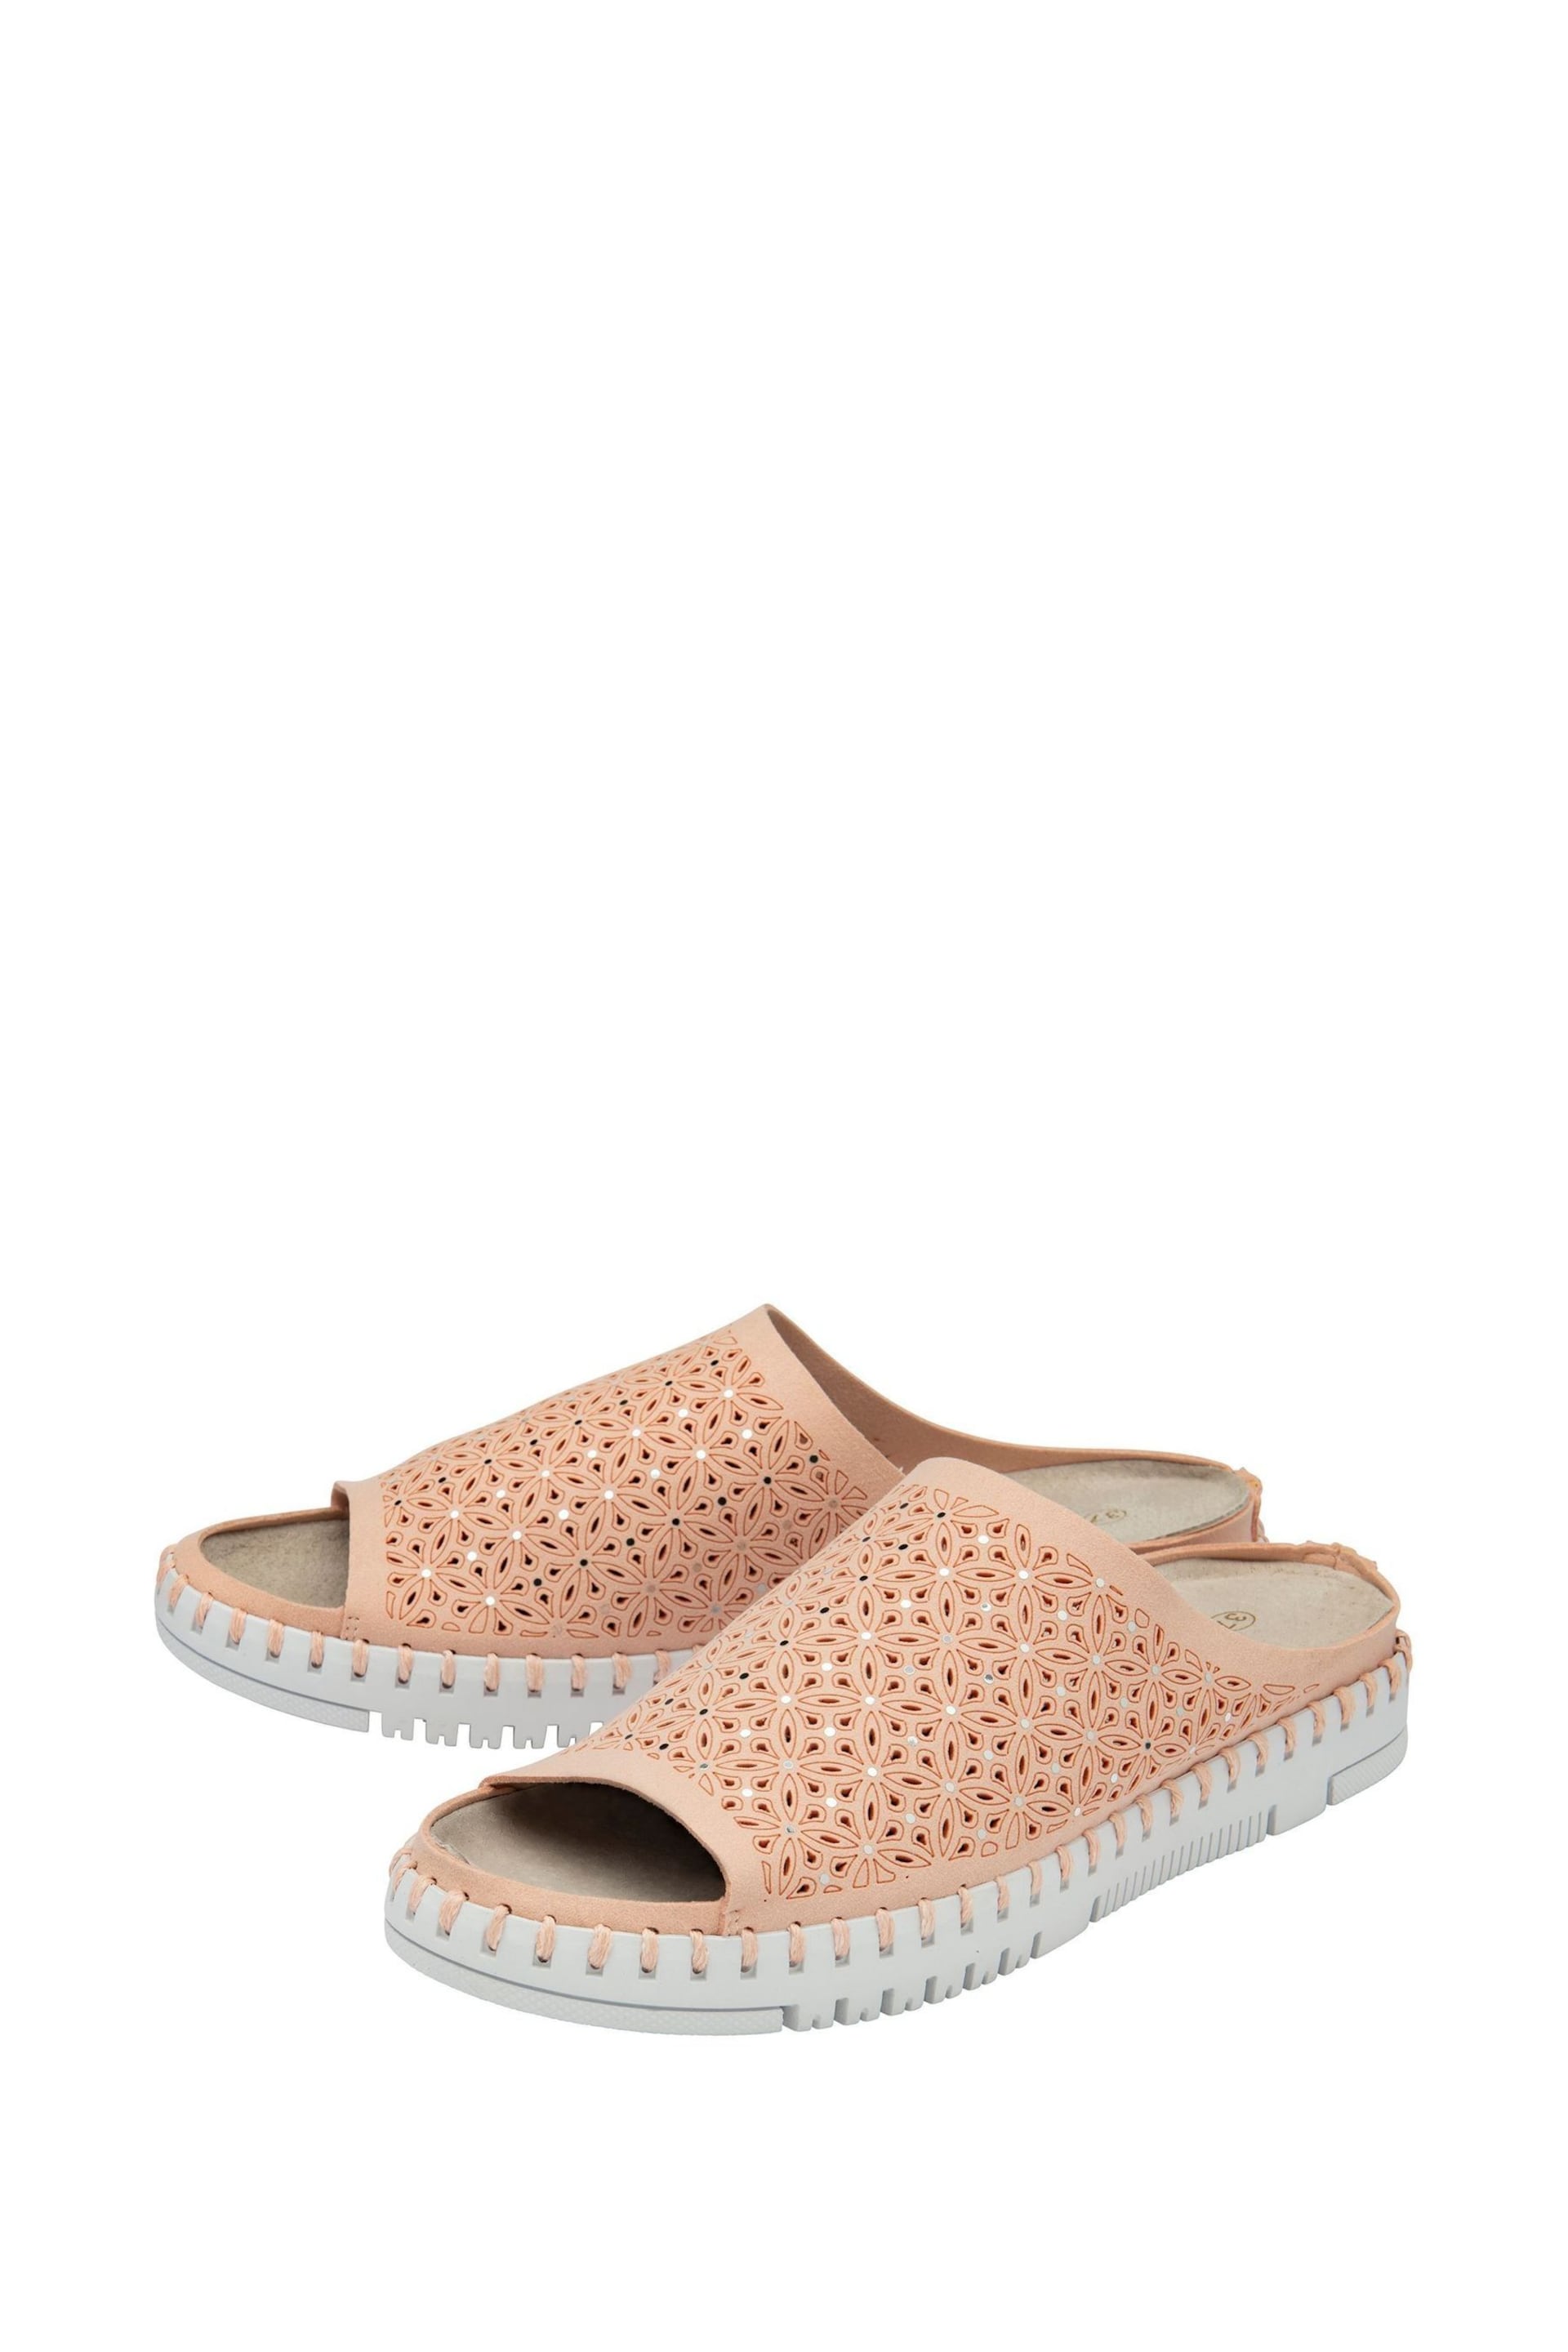 Lotus Pink Flat Mule Sandals - Image 2 of 4